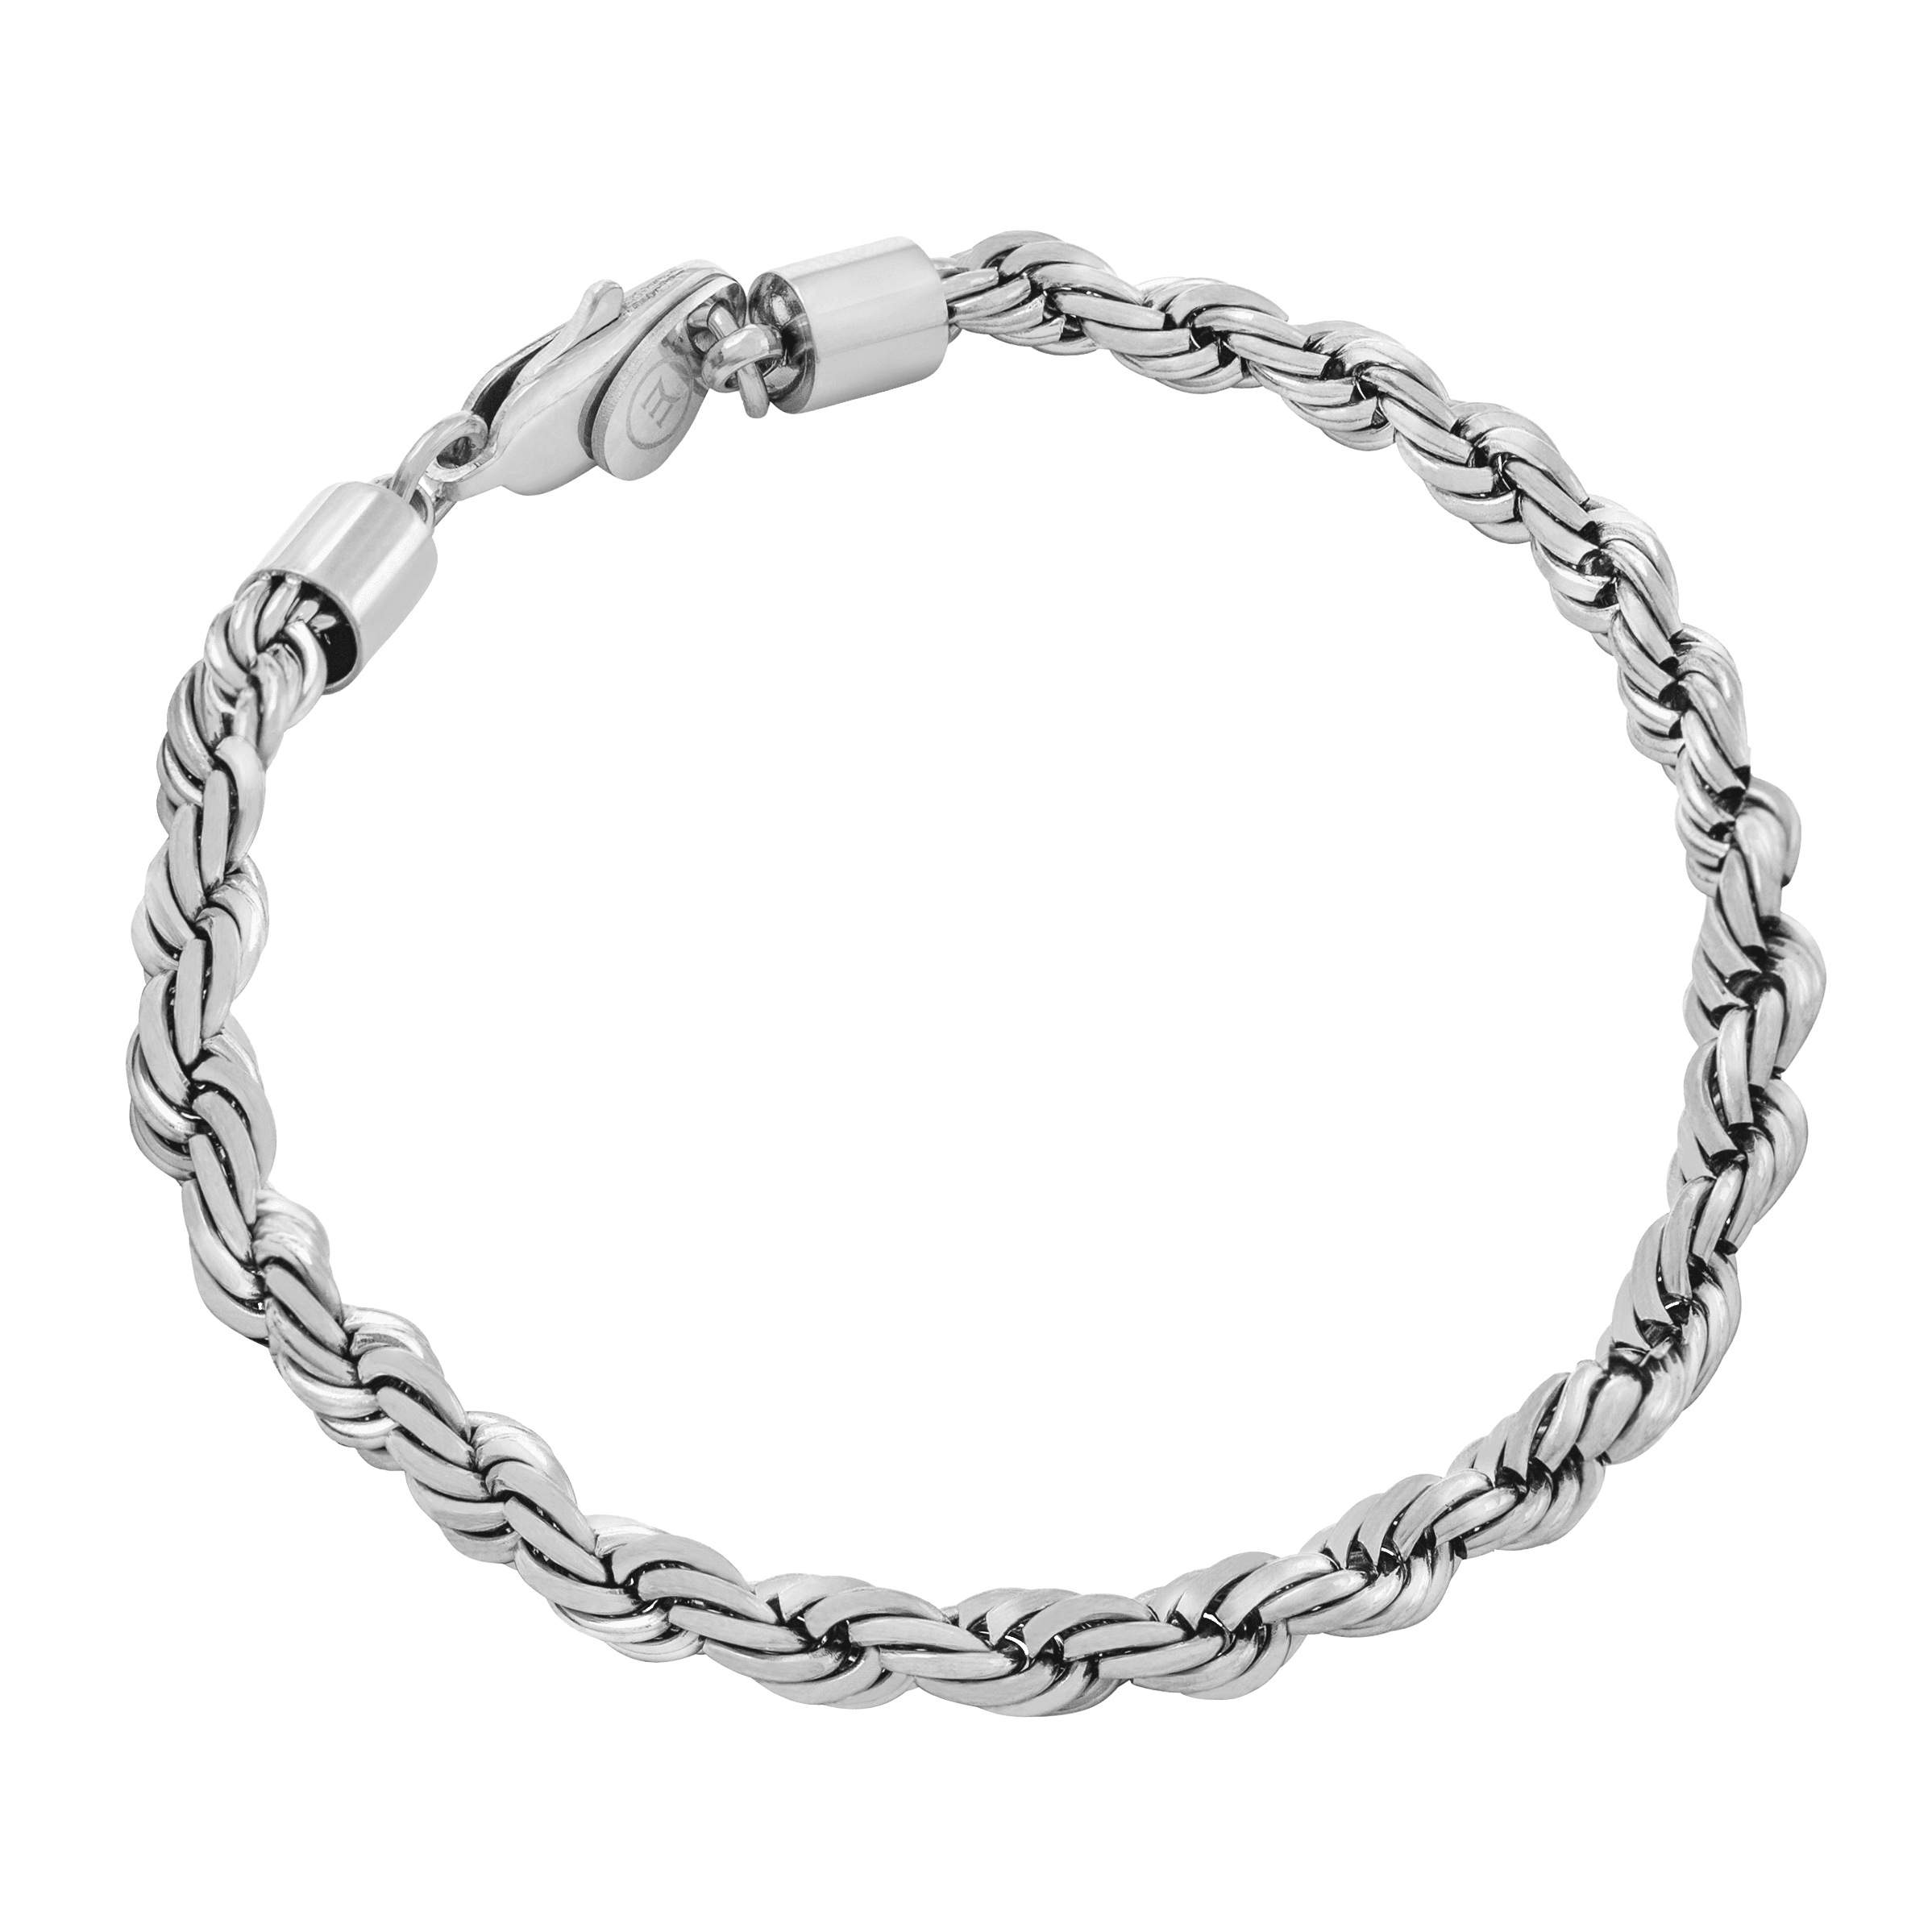 5mm Rope Chain + Bracelet Bundle Set - Premium 316L Stainless